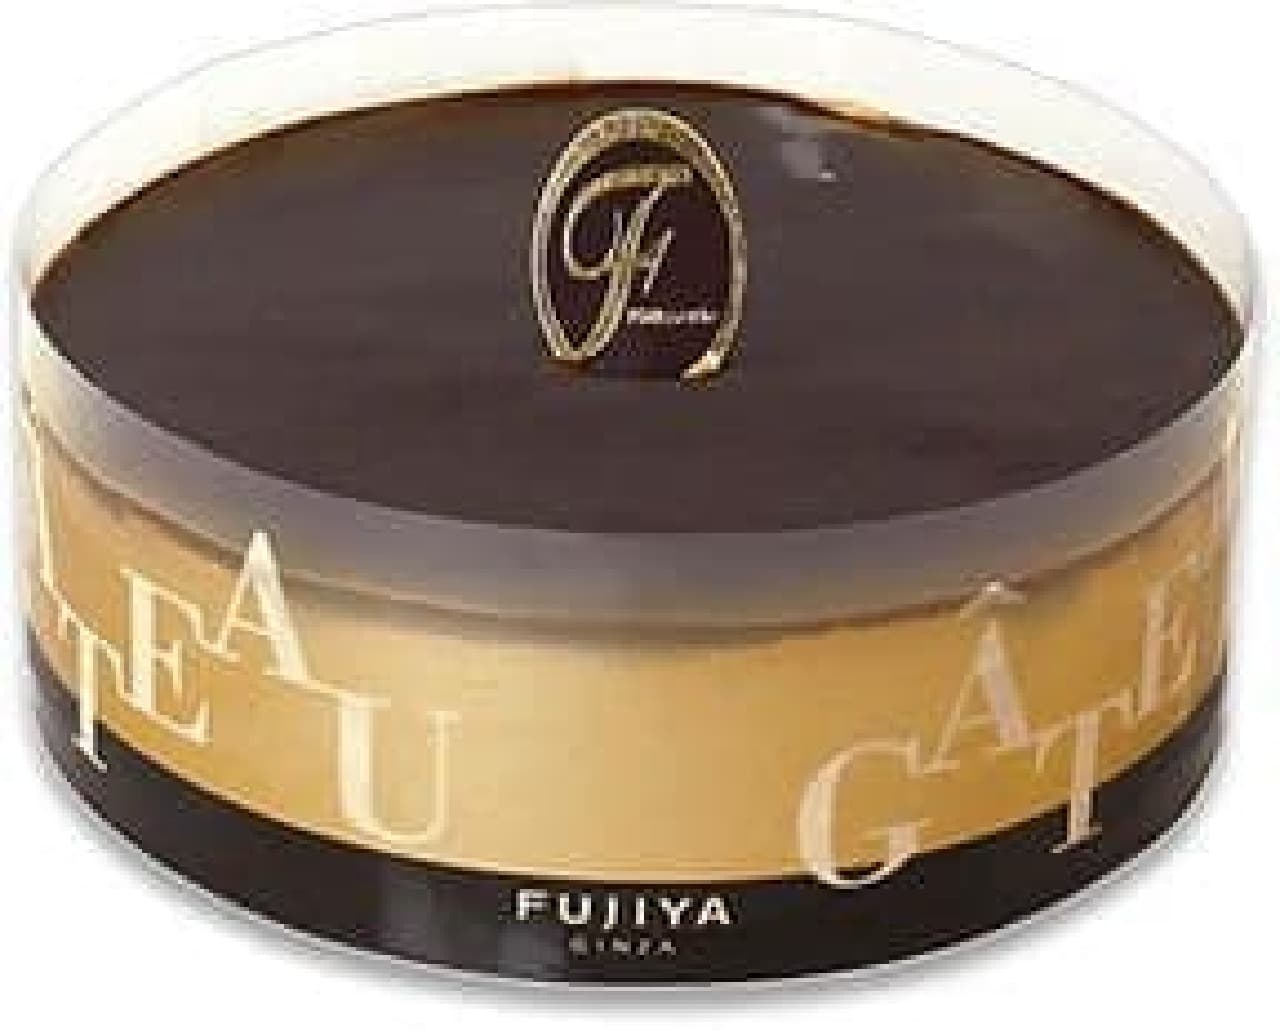 Fujiya pastry shop "Authentic raw chocolate cake"